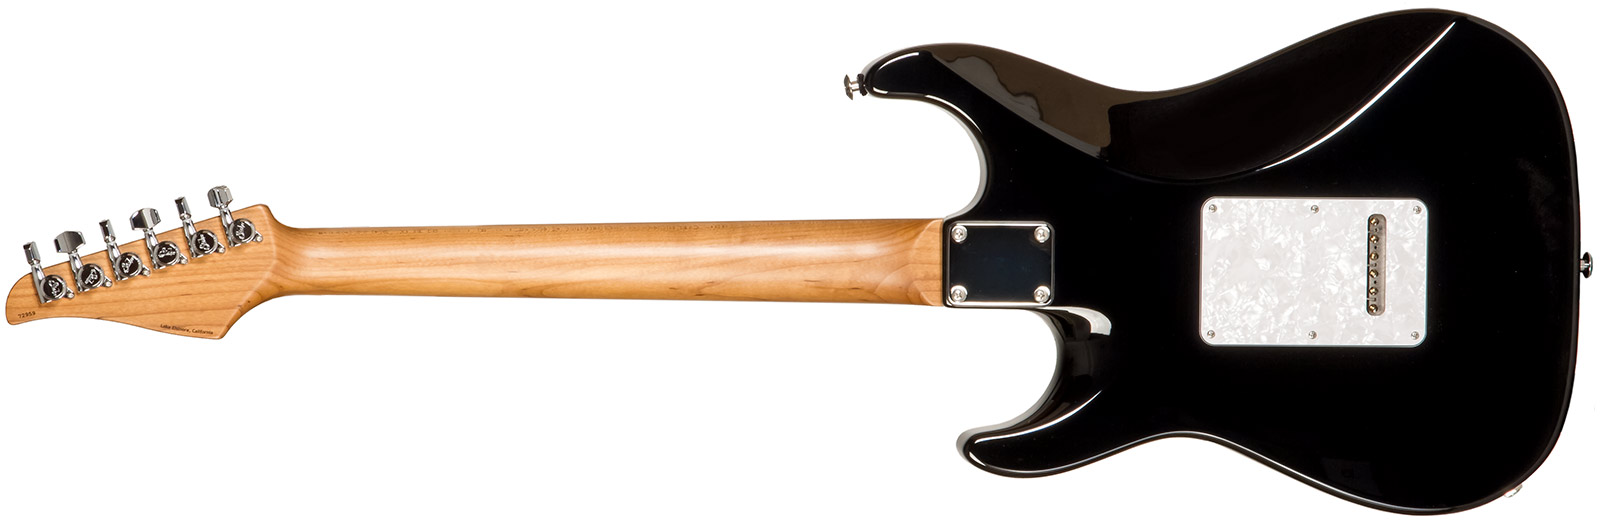 Suhr Standard Plus Usa Hss Trem Pf #72959 - Bengal Burst - Guitarra eléctrica con forma de str. - Variation 1